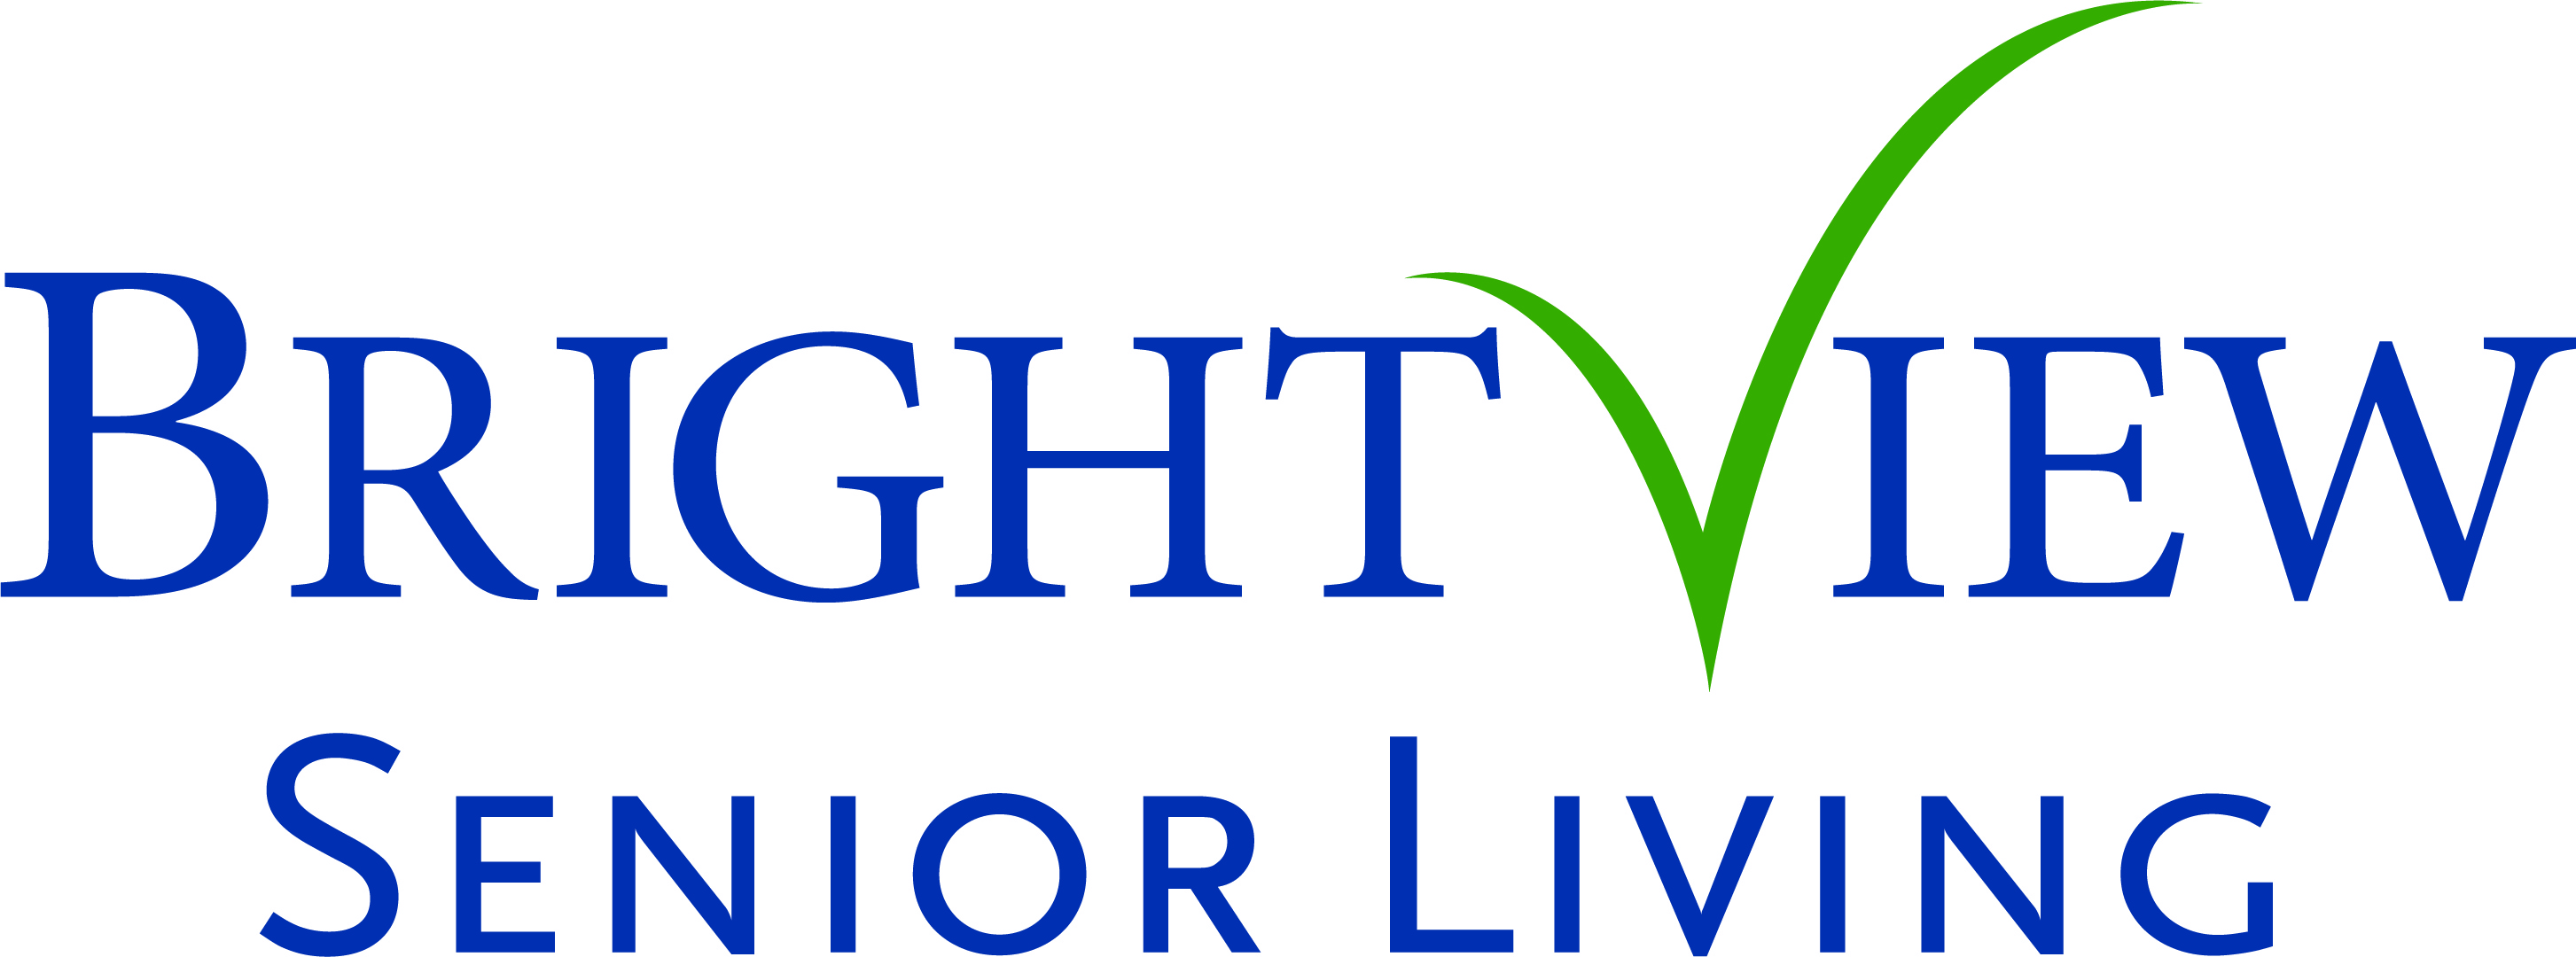 41. Brightview Senior Living